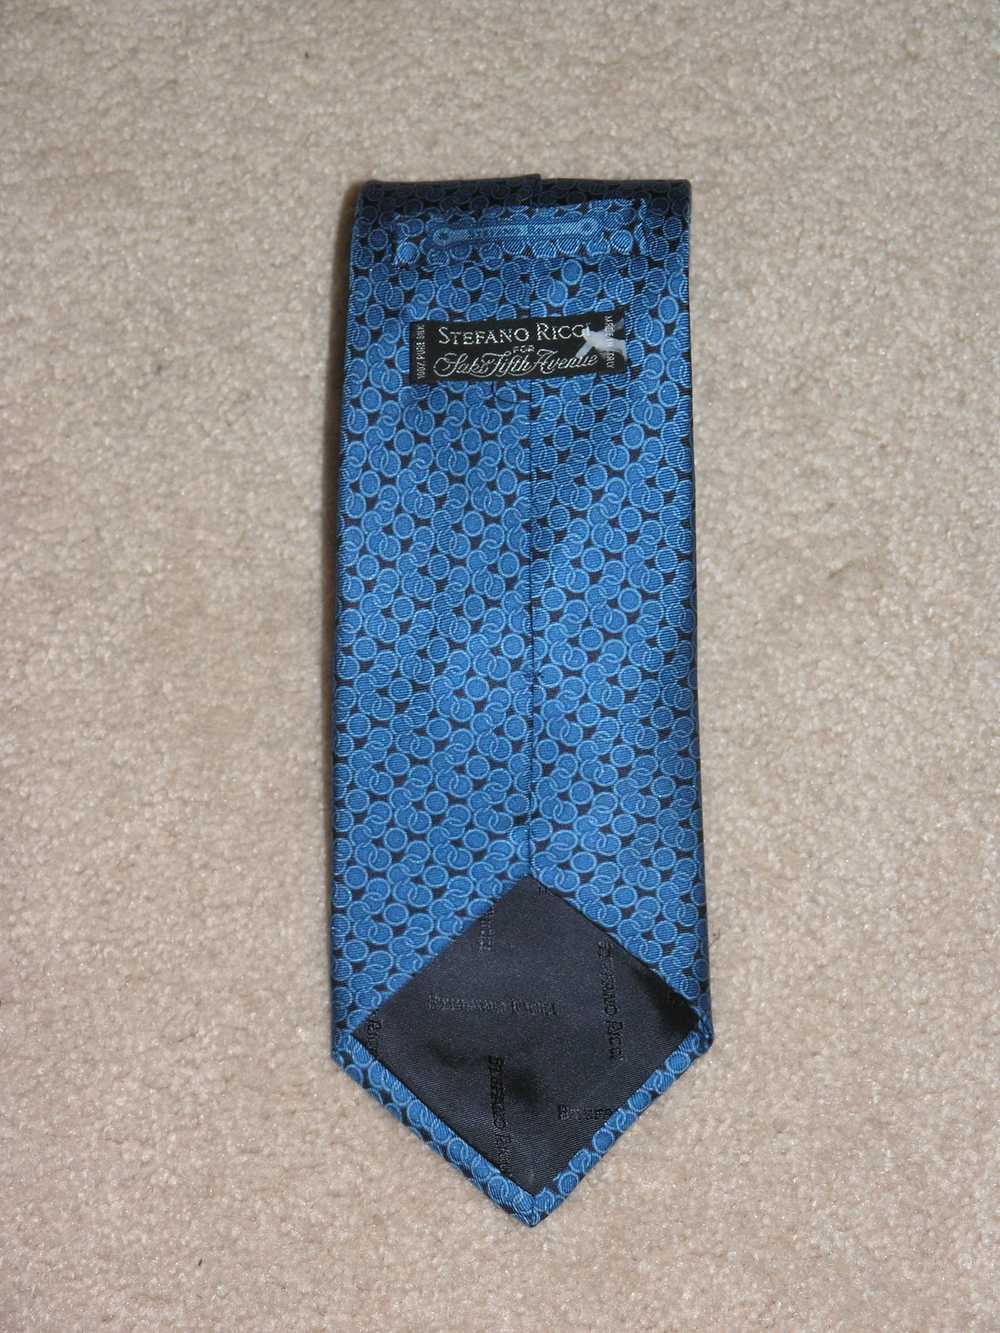 Stefano Ricci - Blue silk tie in pattern pattern CXDD41070 buy at Symbol